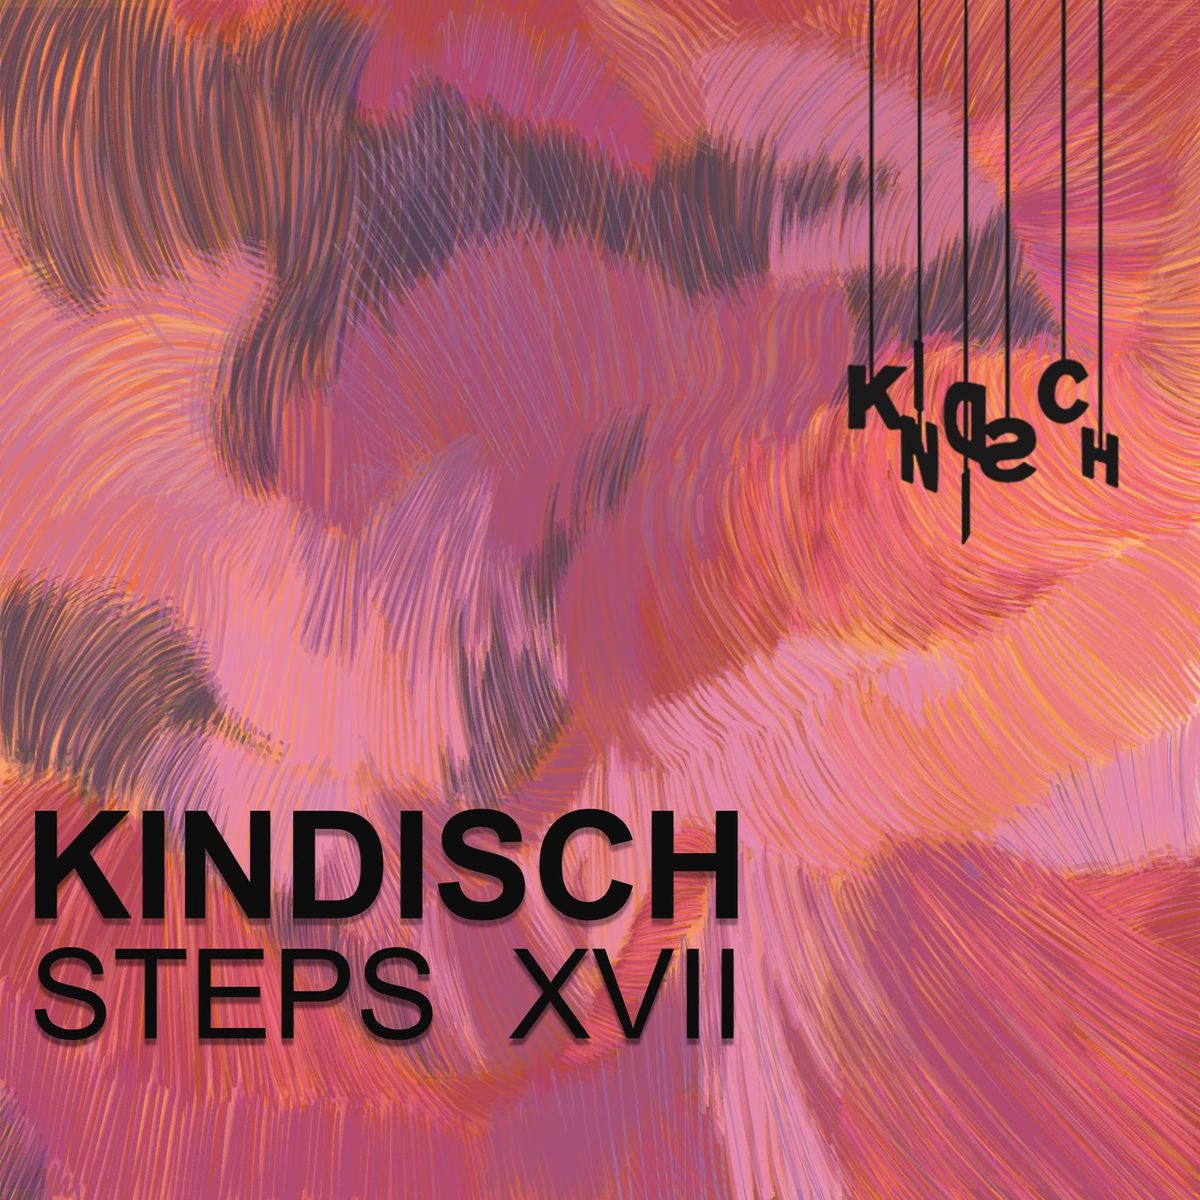 Download Kindisch Steps XVII on Electrobuzz